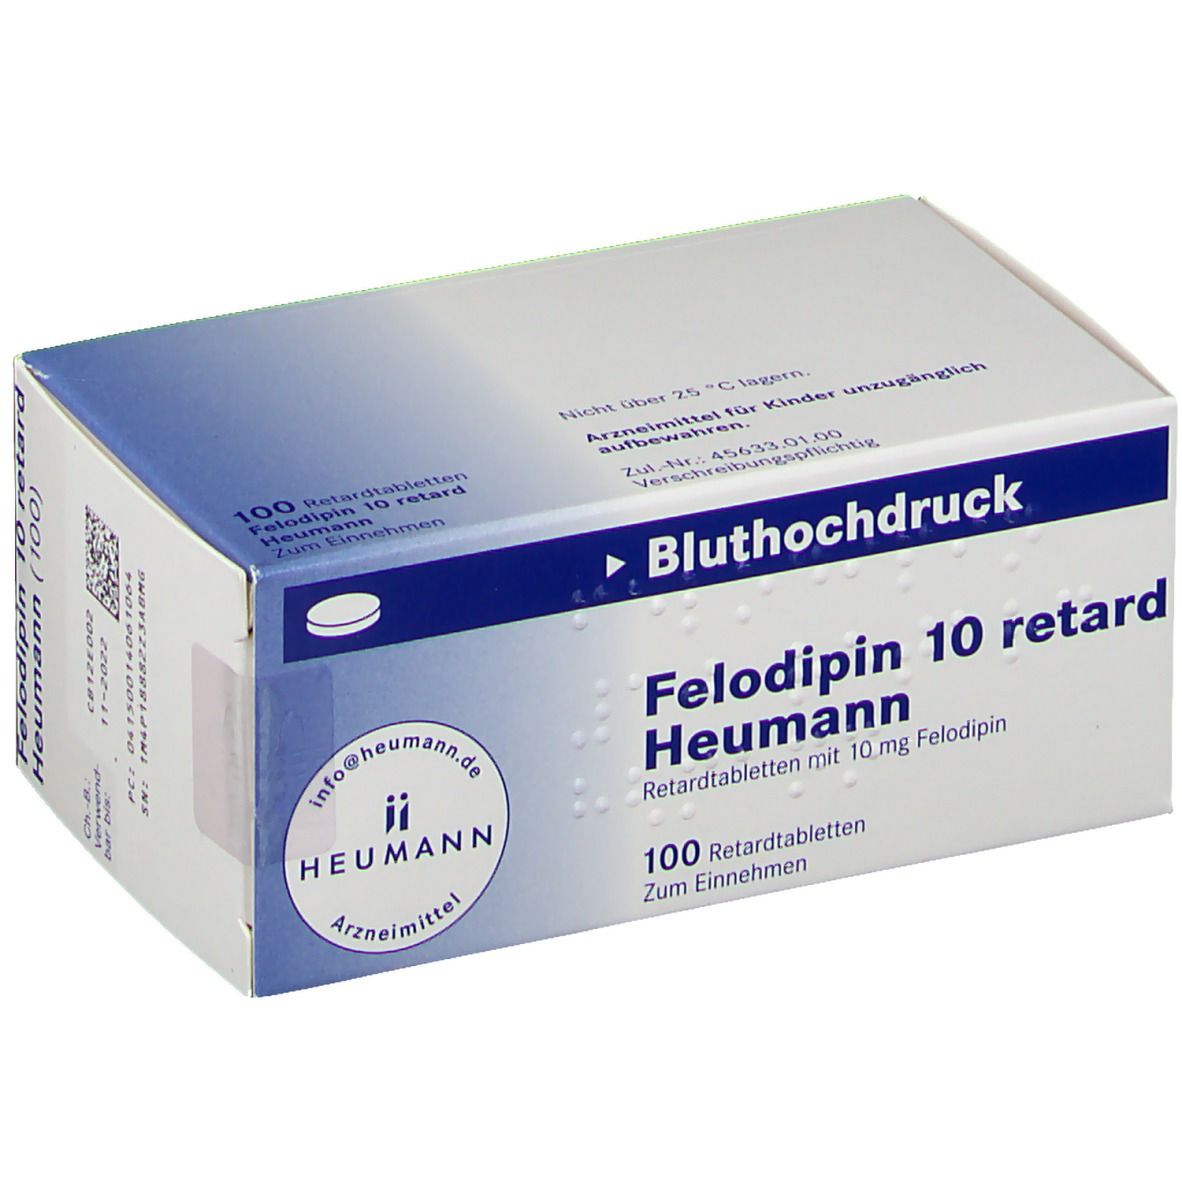 Felodipin 10 mg retard Heumann